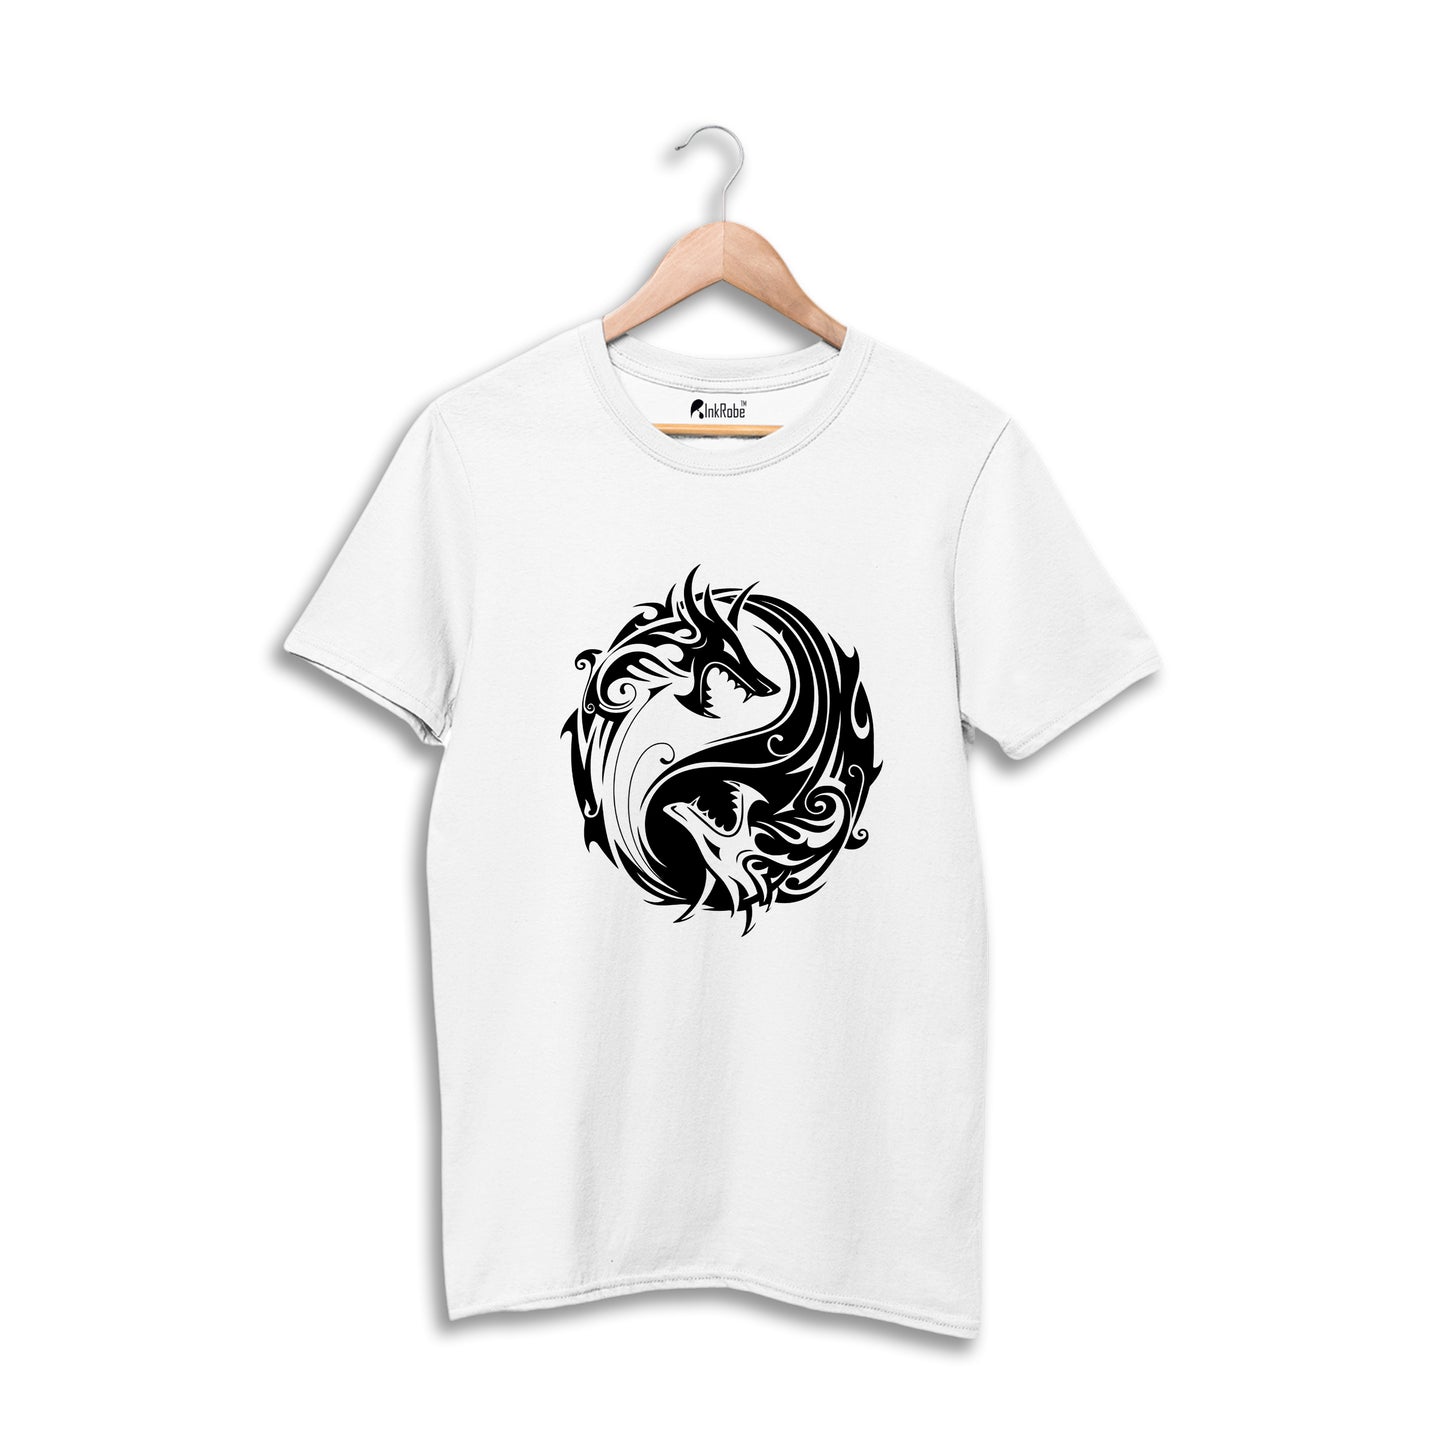 Fierce Dragon - Anime T-Shirt